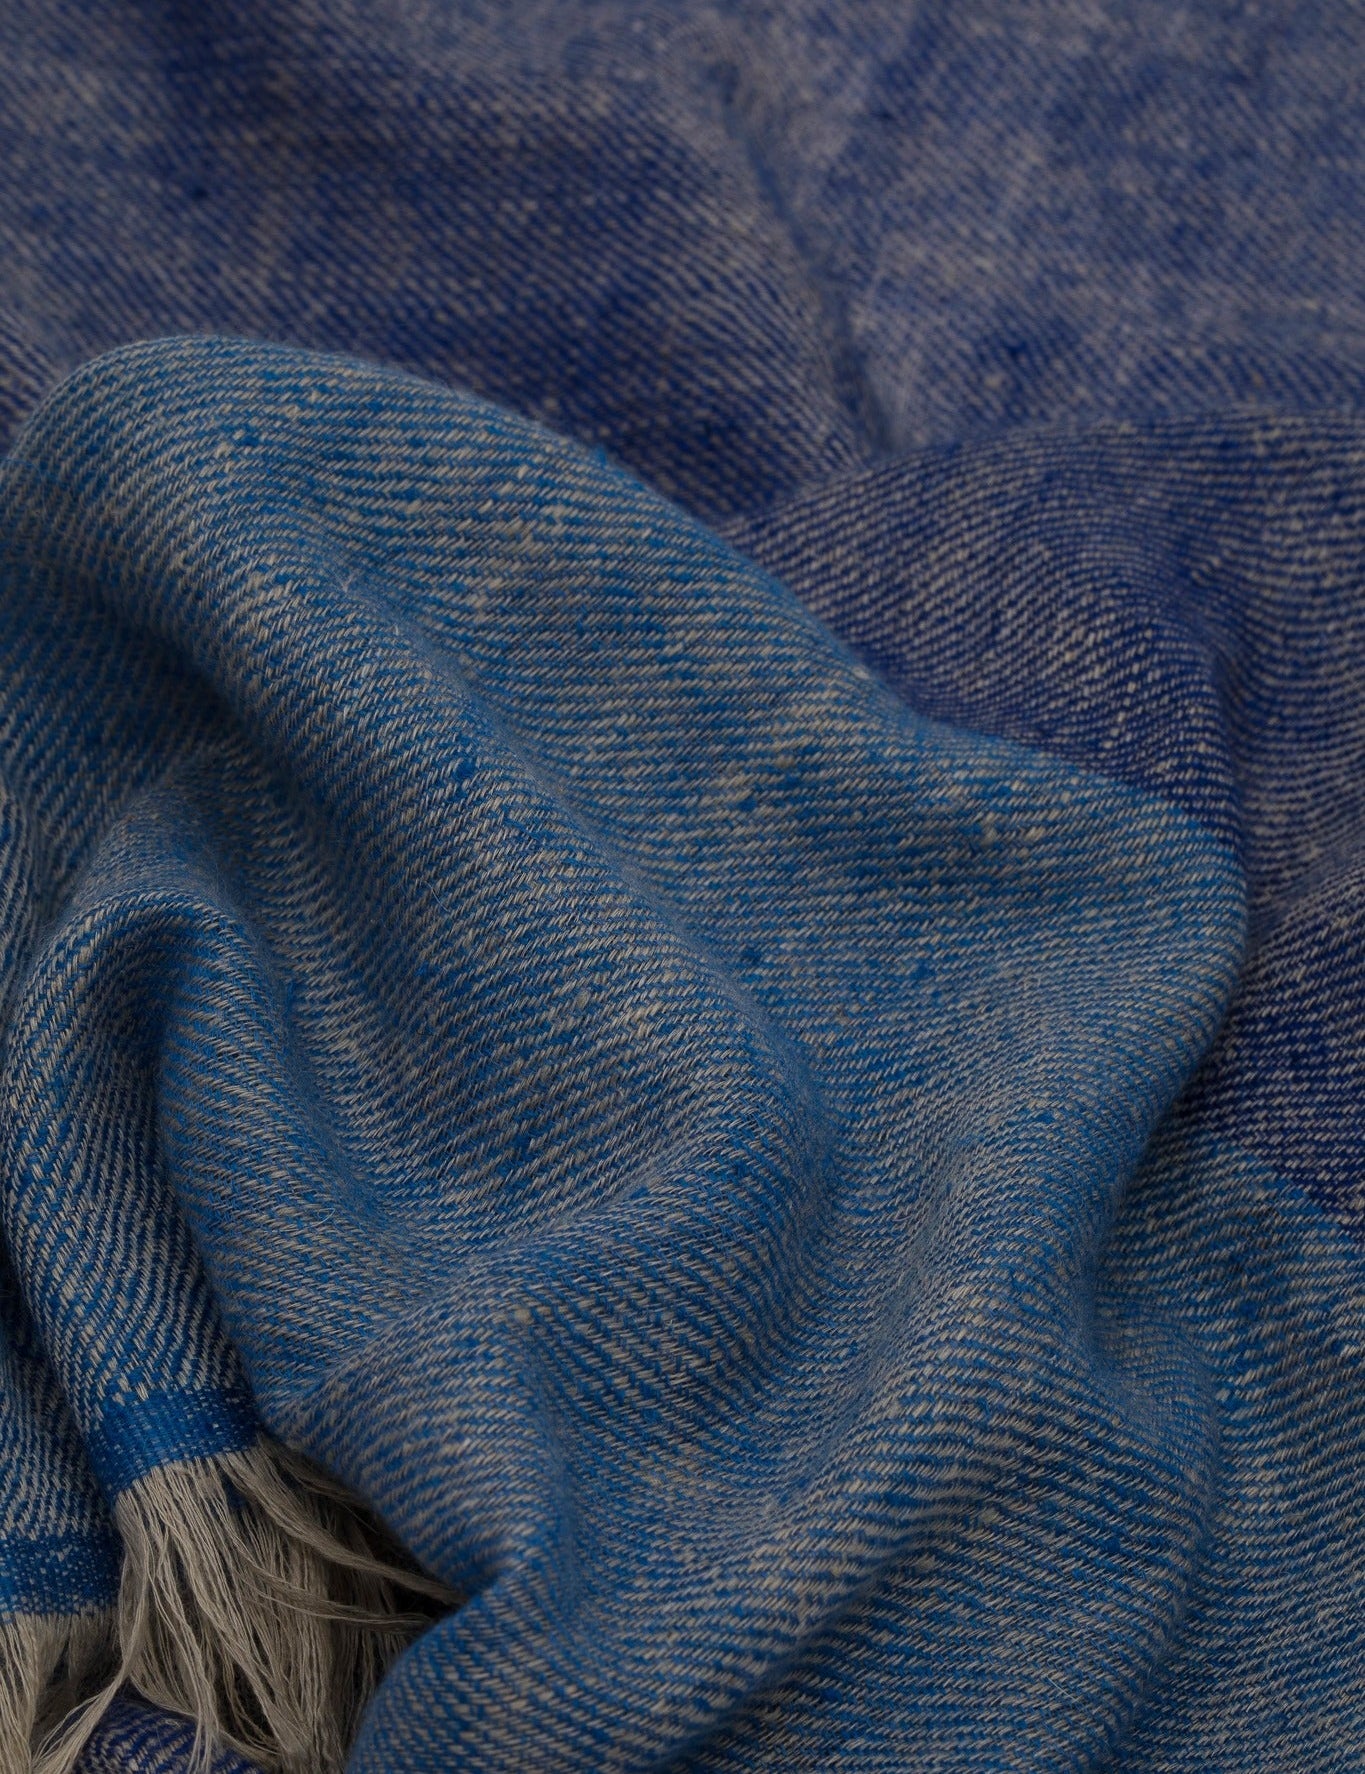 mens-blue-cashmere-luxury-scarf-close-view_61539fe7-4af7-43de-90e1-05113cd25d10.jpg